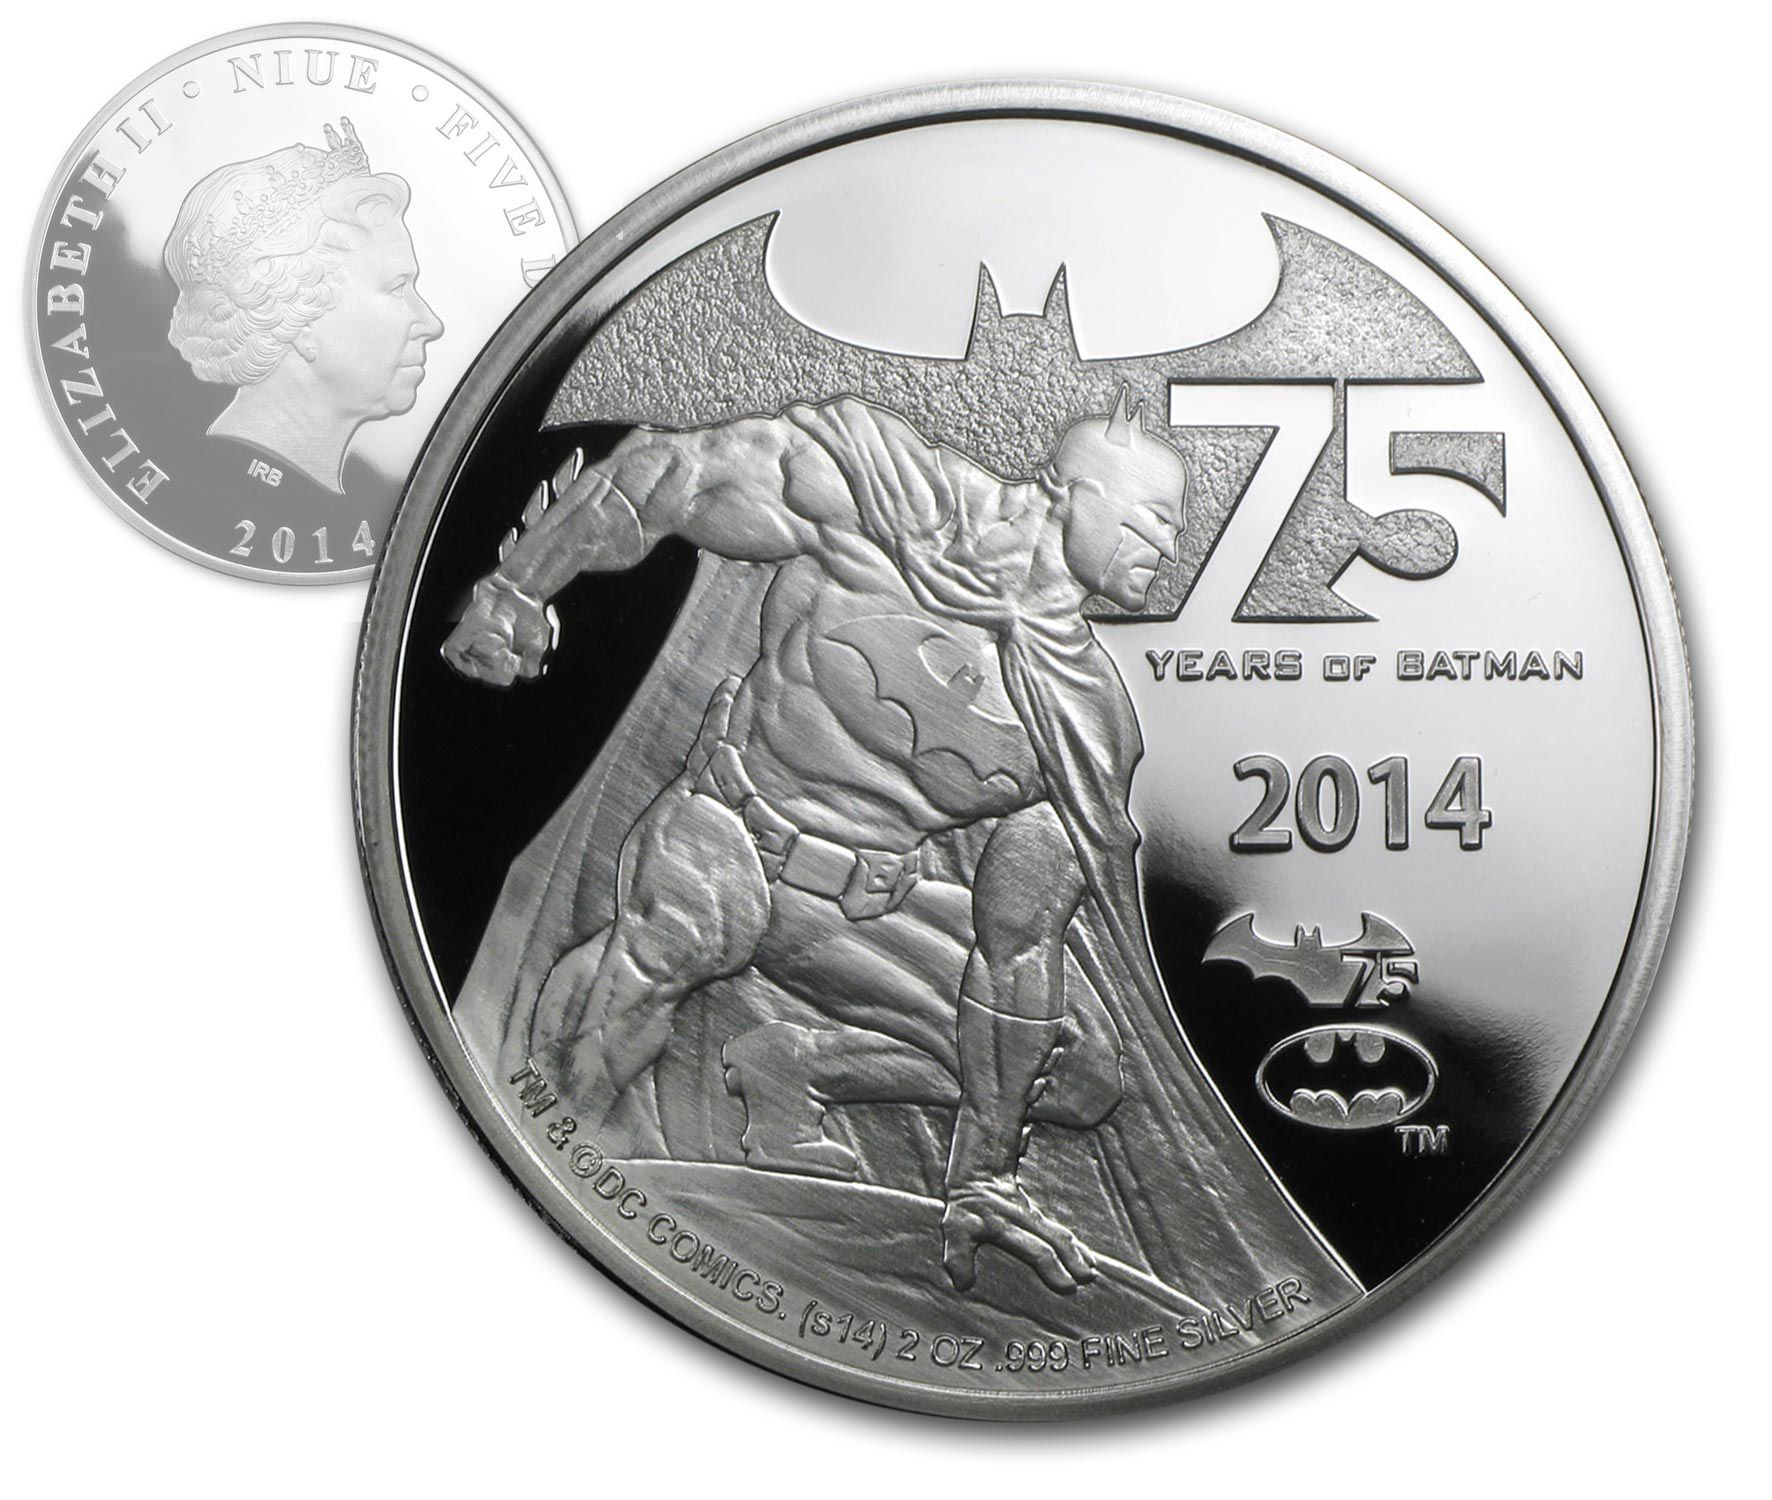 Серебряная монета о Бэтмене